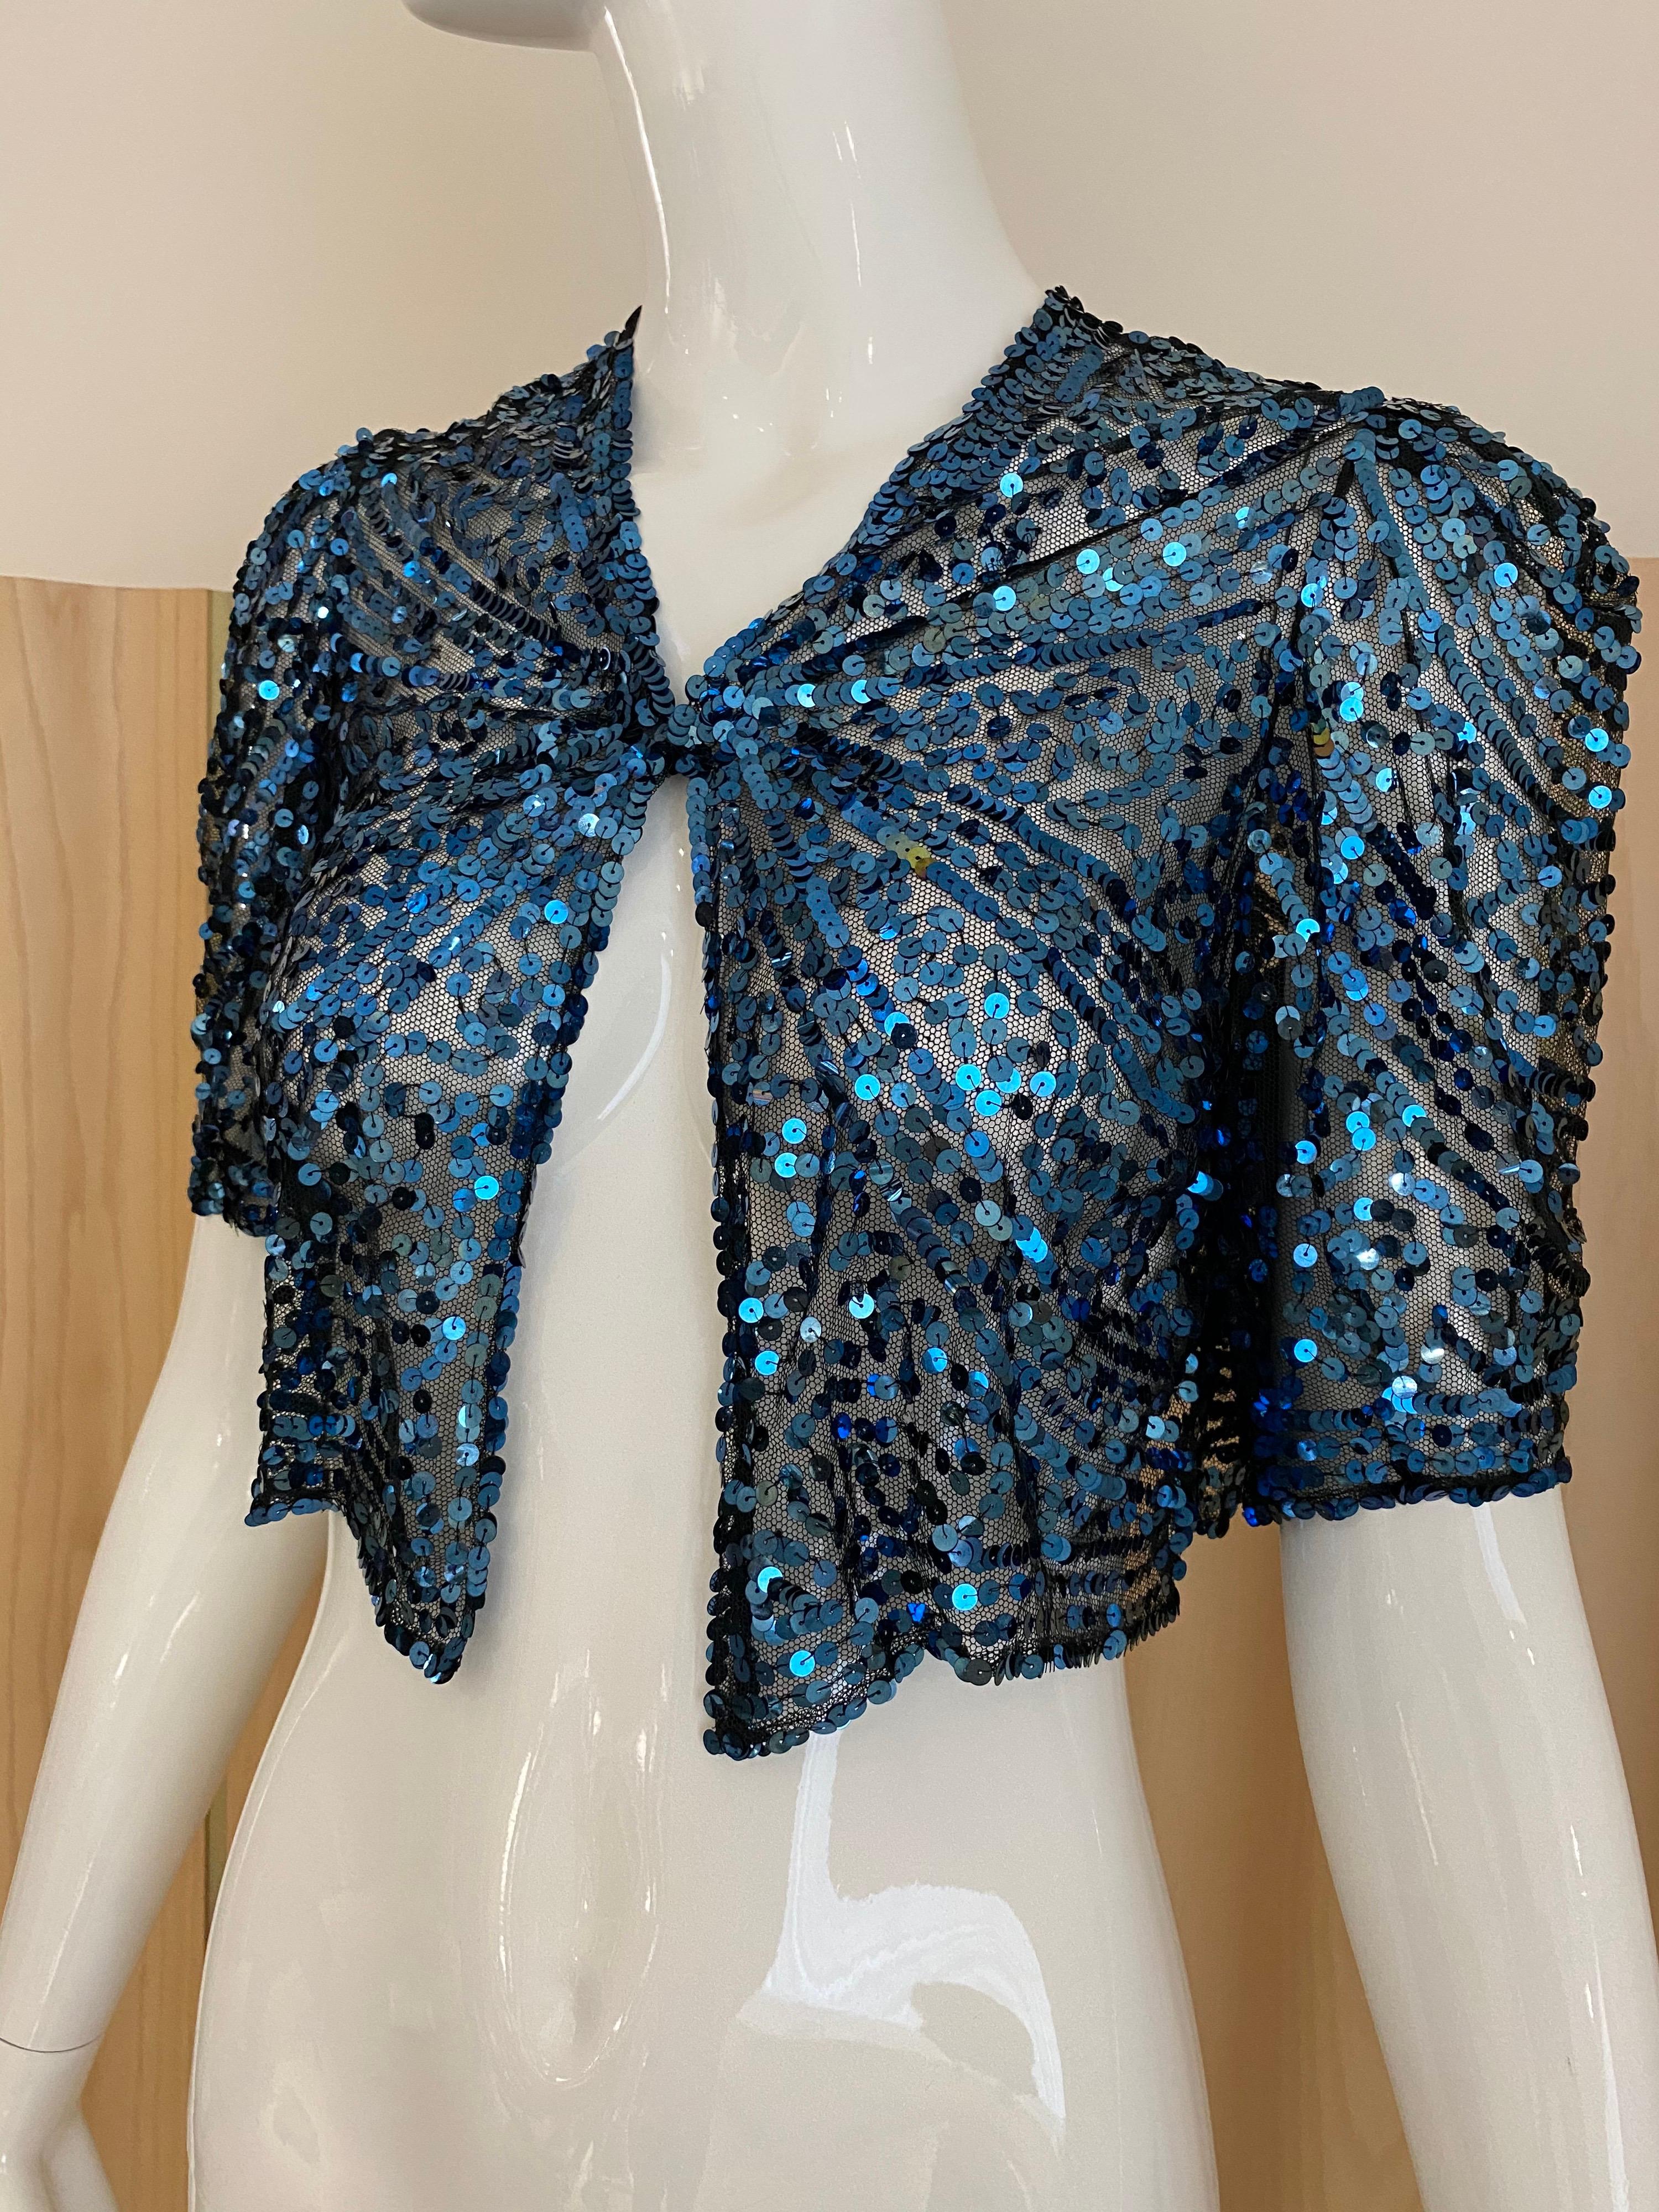 Beautiful 1930s blue sequin bolero crops jacket.
Size 2/4 for small
